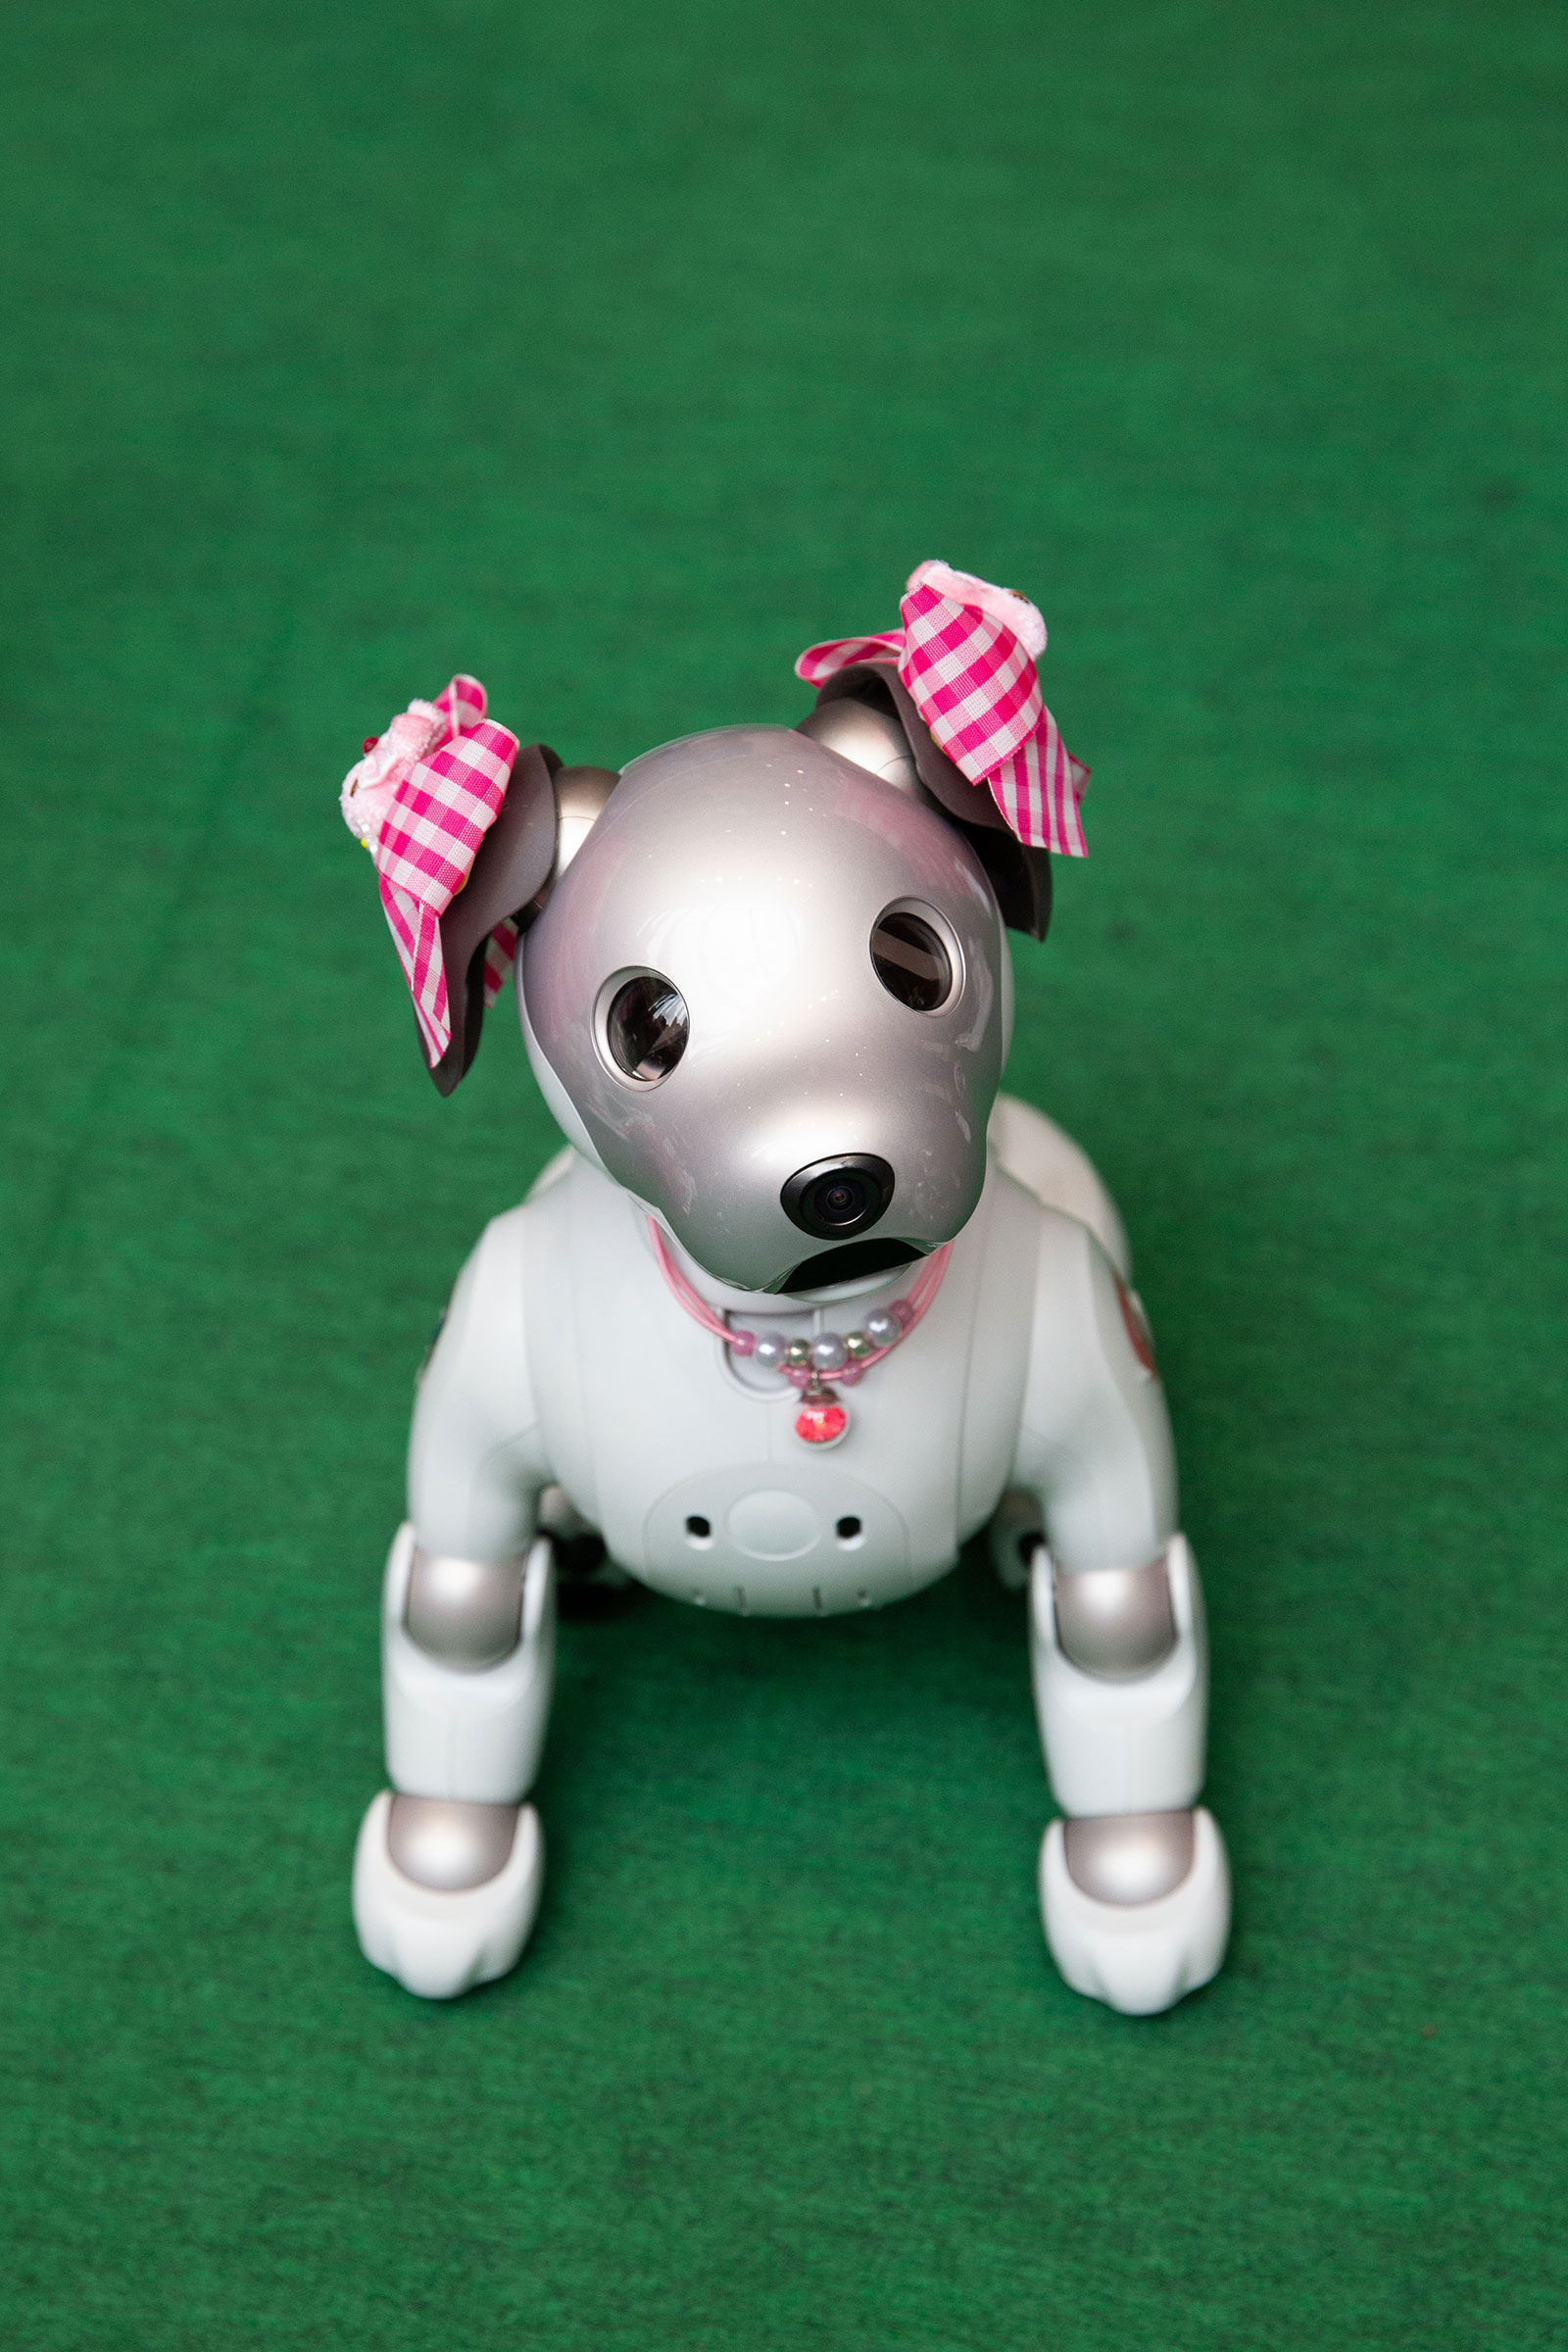 Tekno Newborns Dalmatian Puppy Interactive Robot Pet Voice/touch Responsive for sale online 